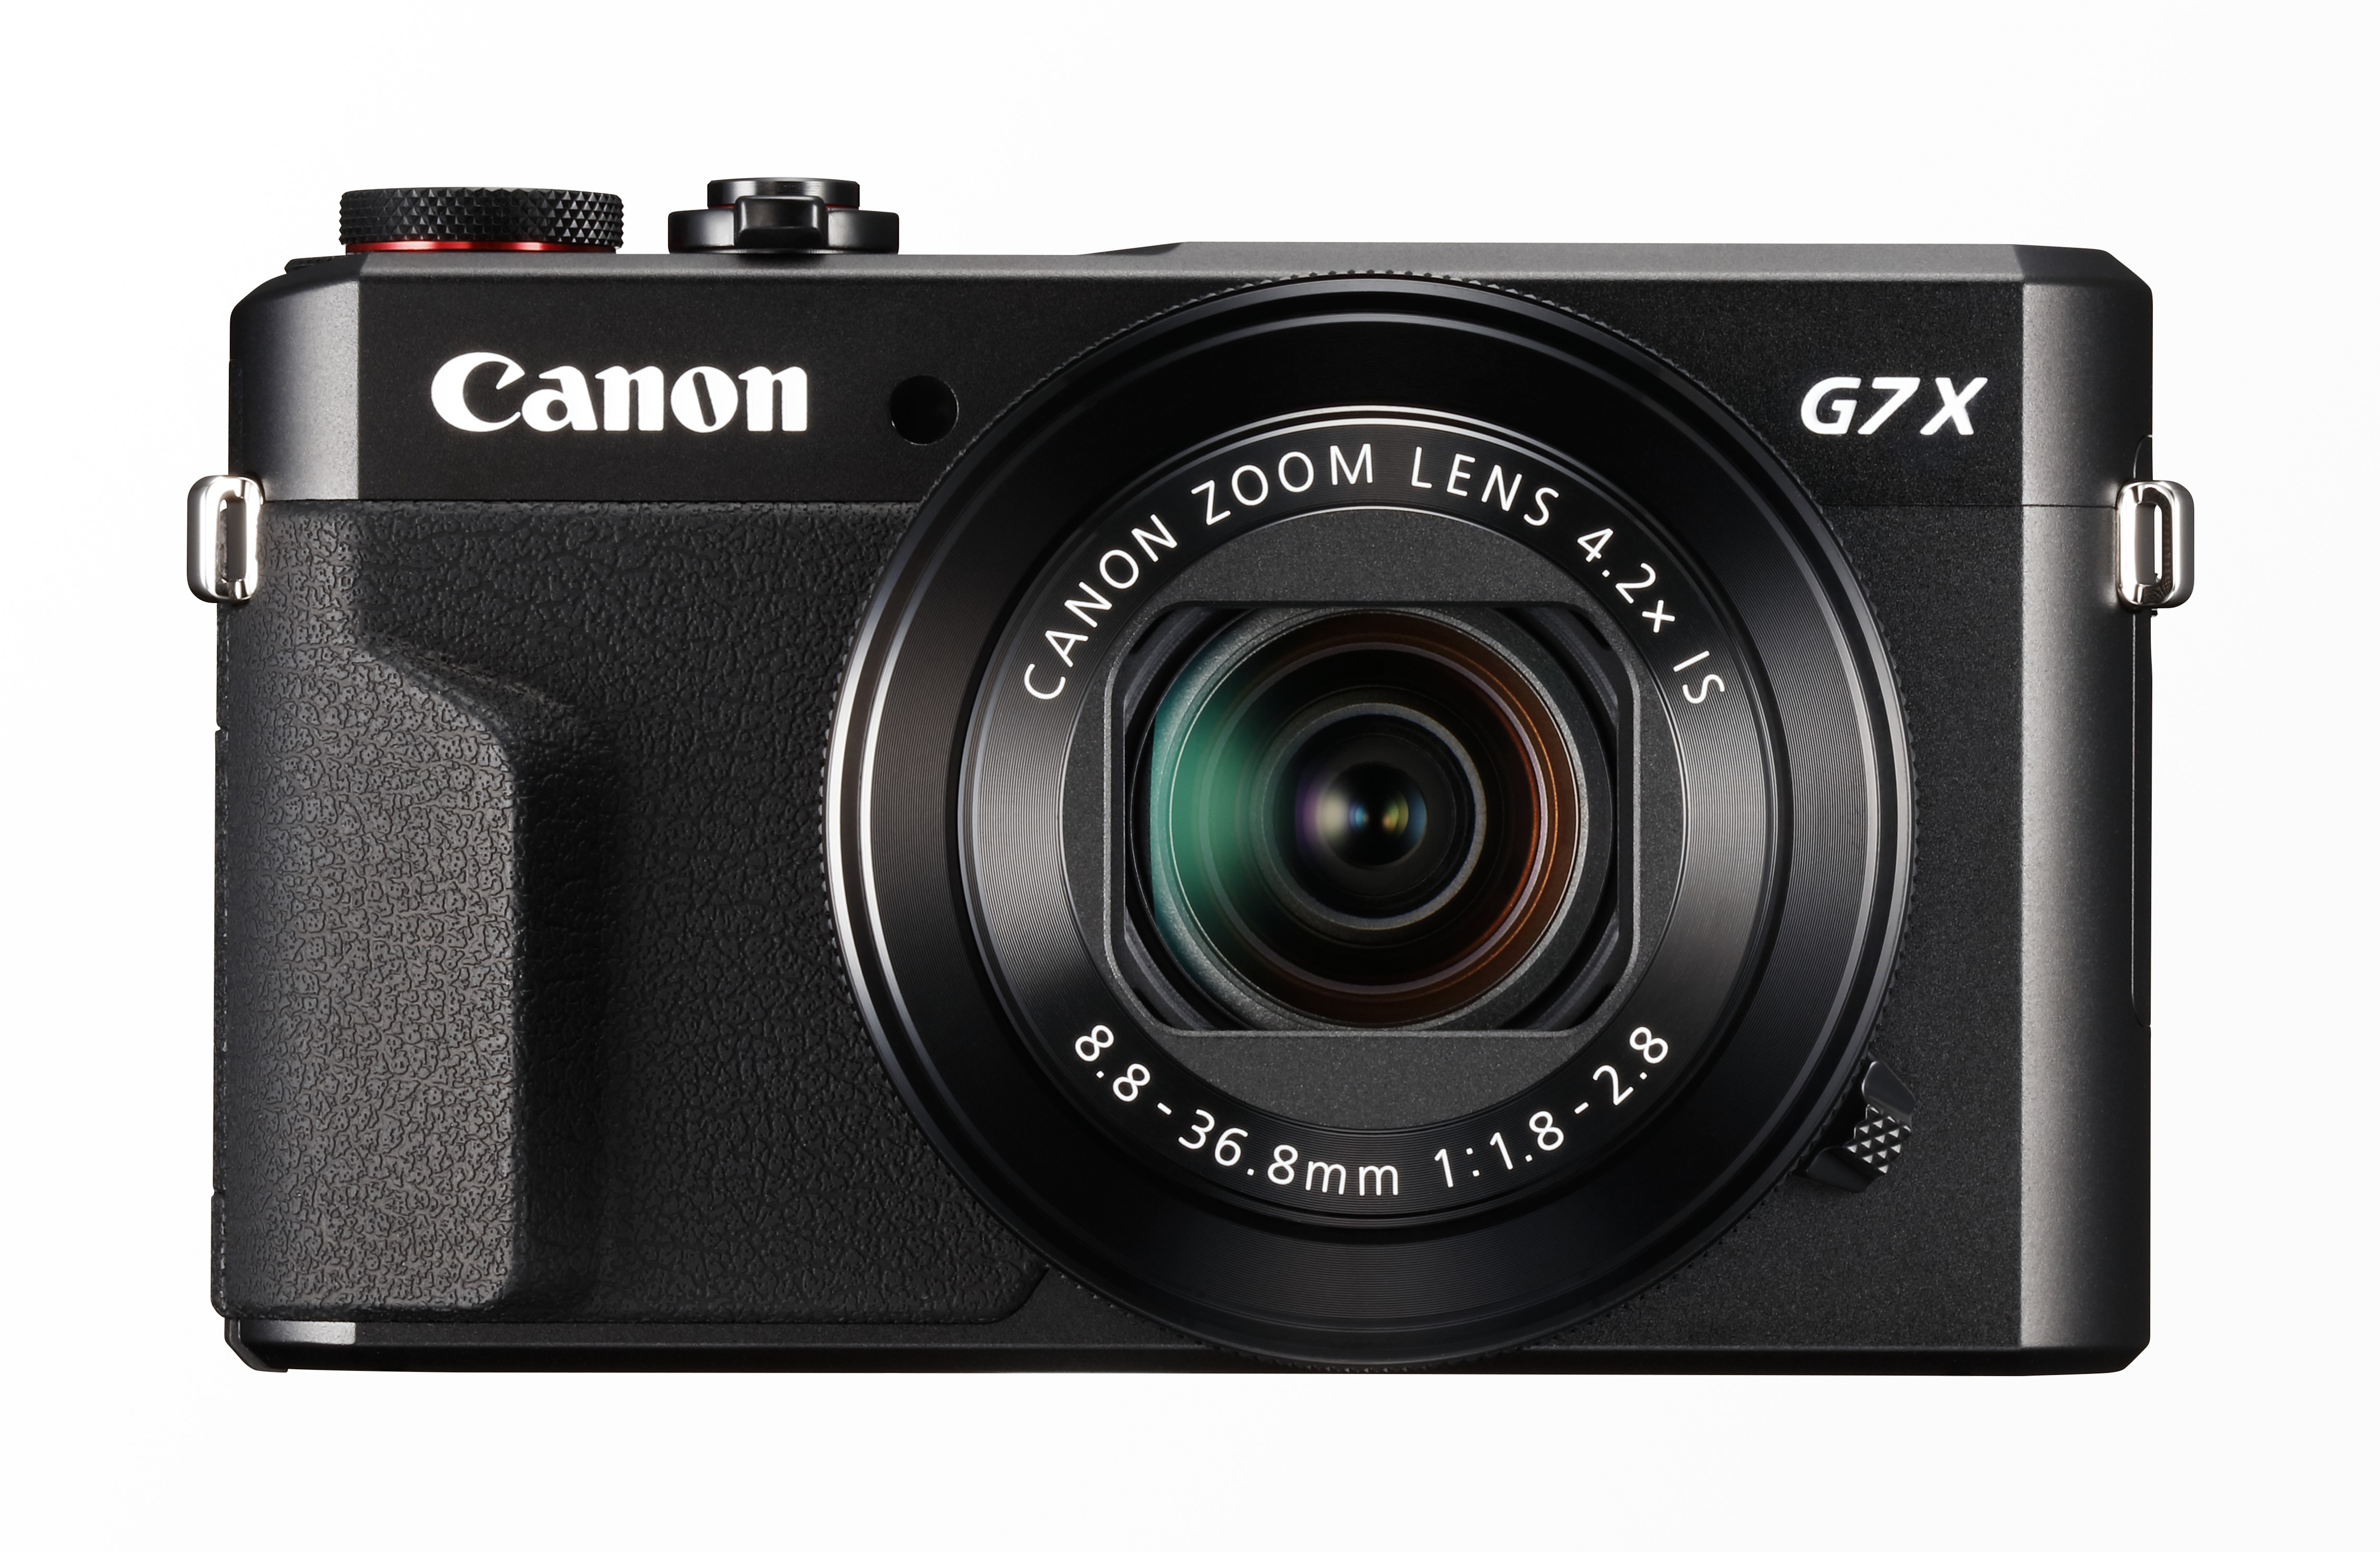 Canon PowerShot G7 X Mark II - Digital camera - compact - 20.1 MP - 1080p / 59.95 fps - 4.2x optical zoom - Wi-Fi, NFC